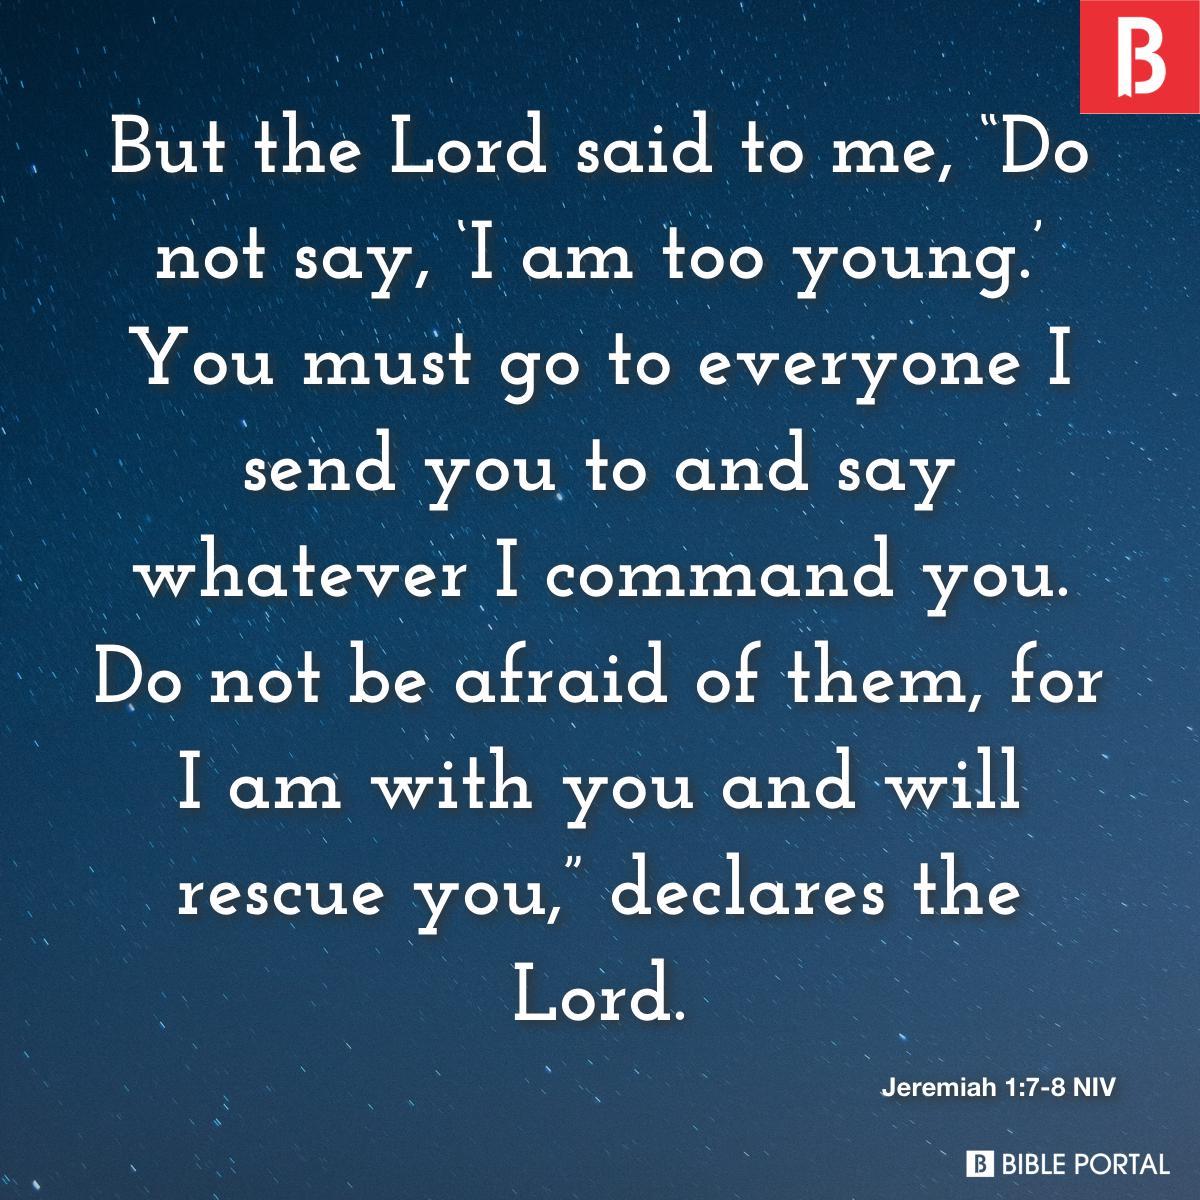 Jeremiah 1:7-8 NIV